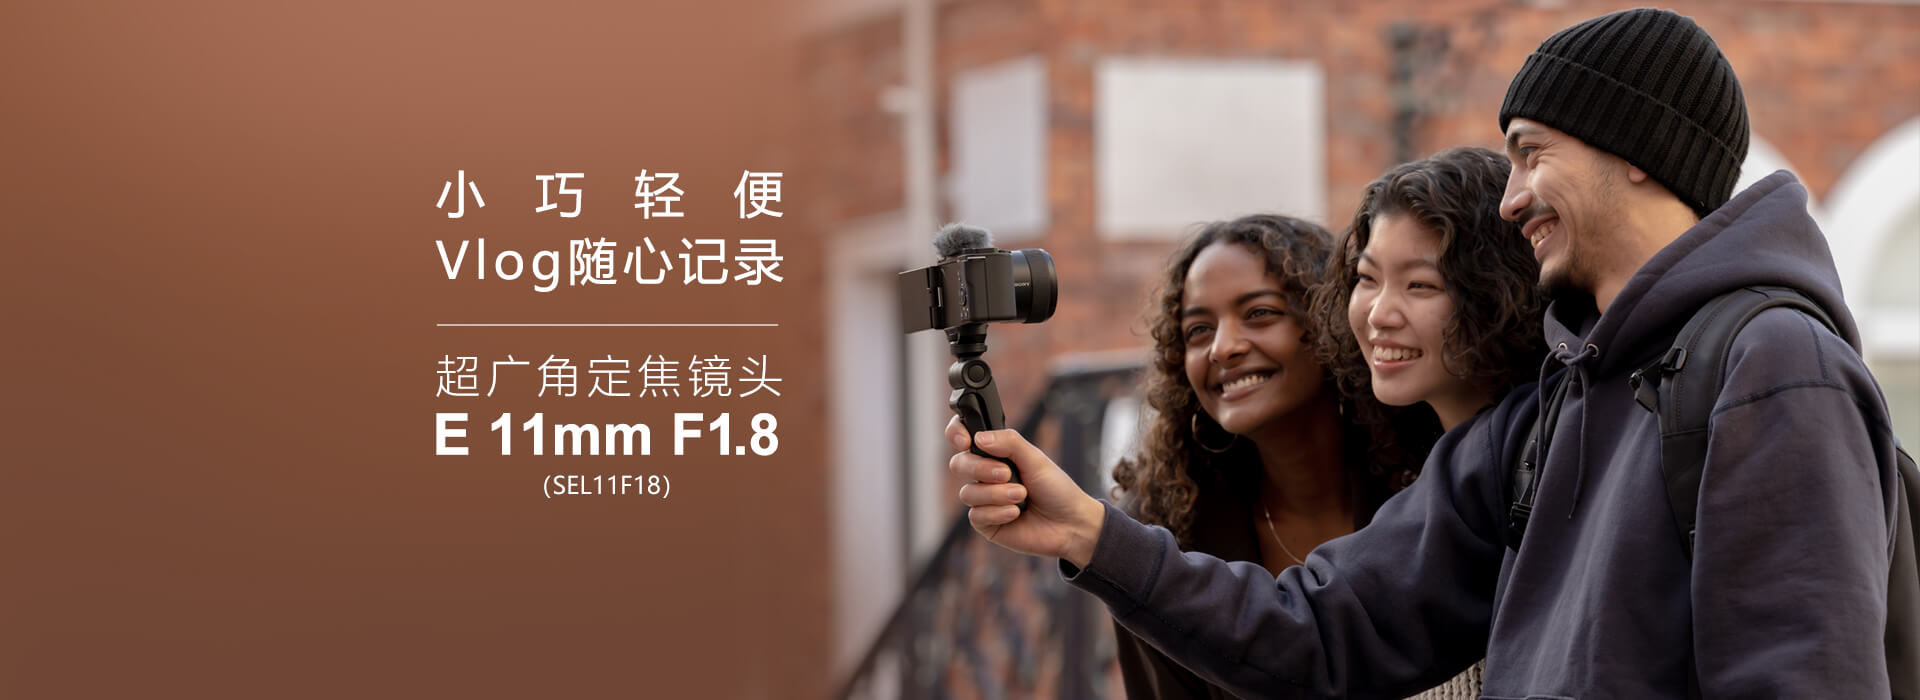 超广角定焦镜头,E 11mm F1.8(SEL11F18)